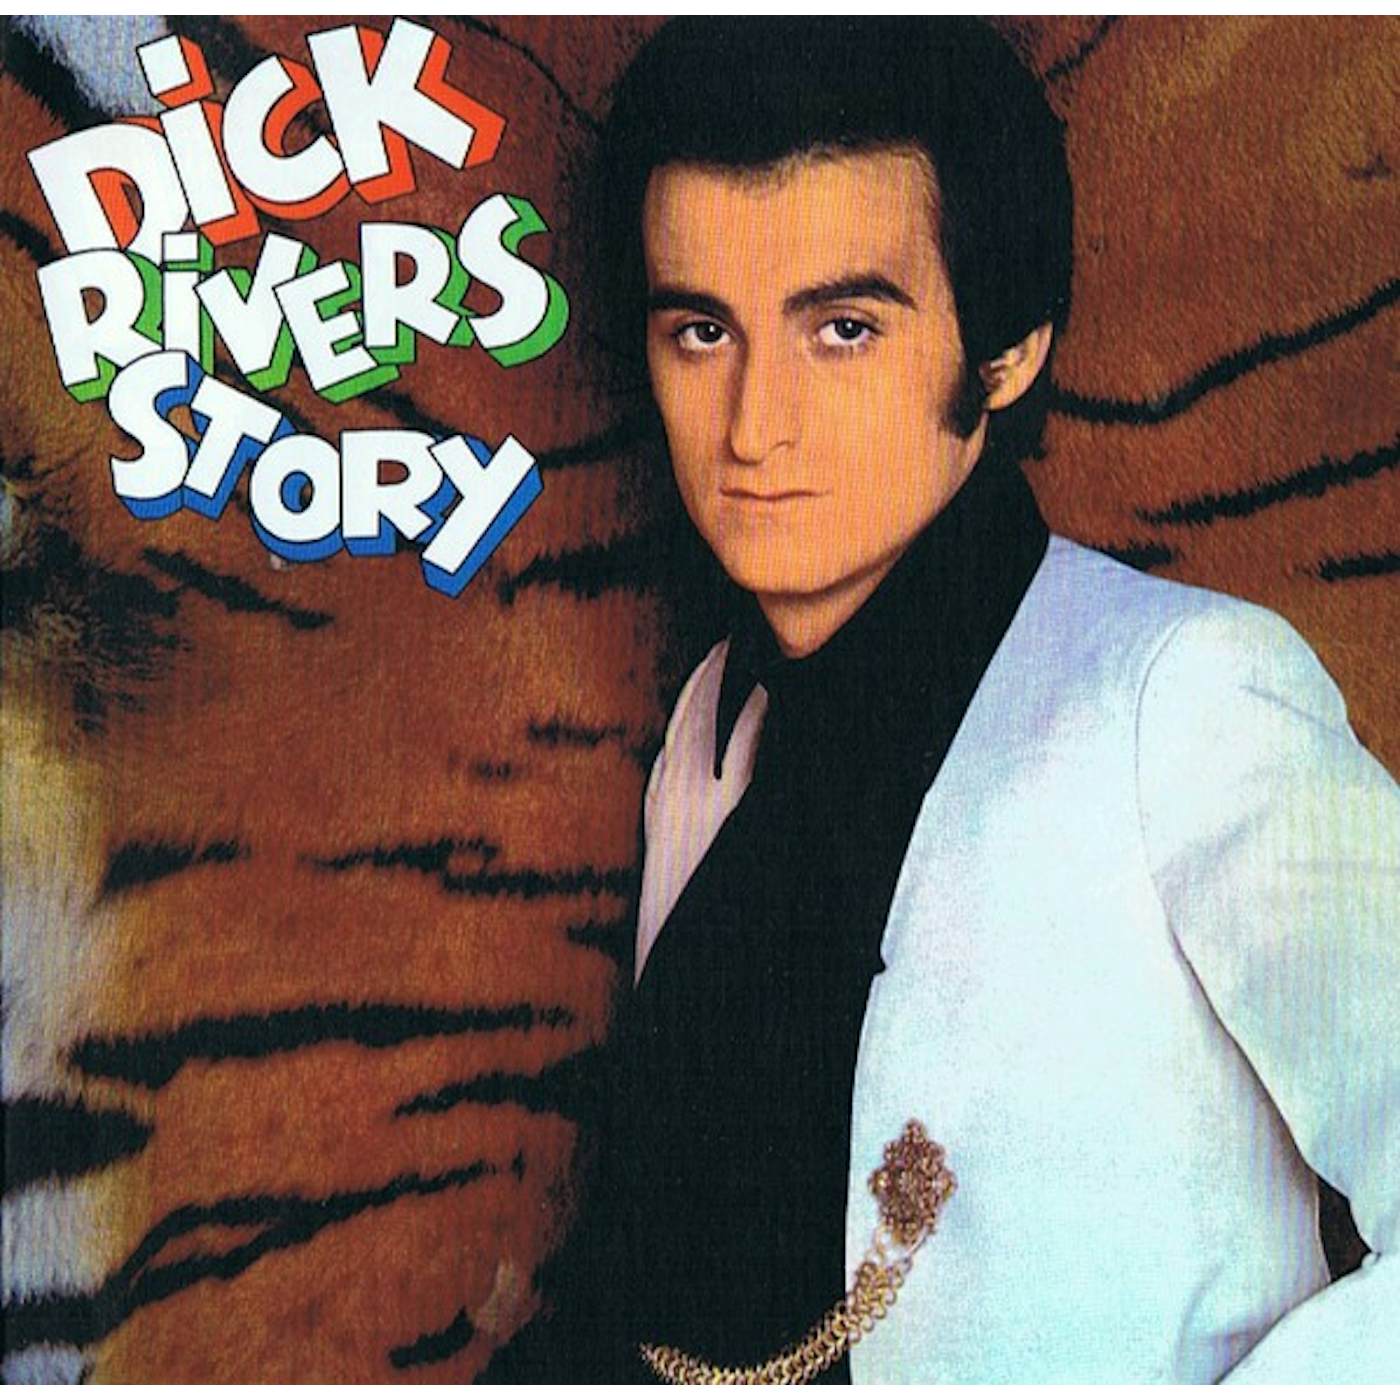 DICK RIVERS STORY CD